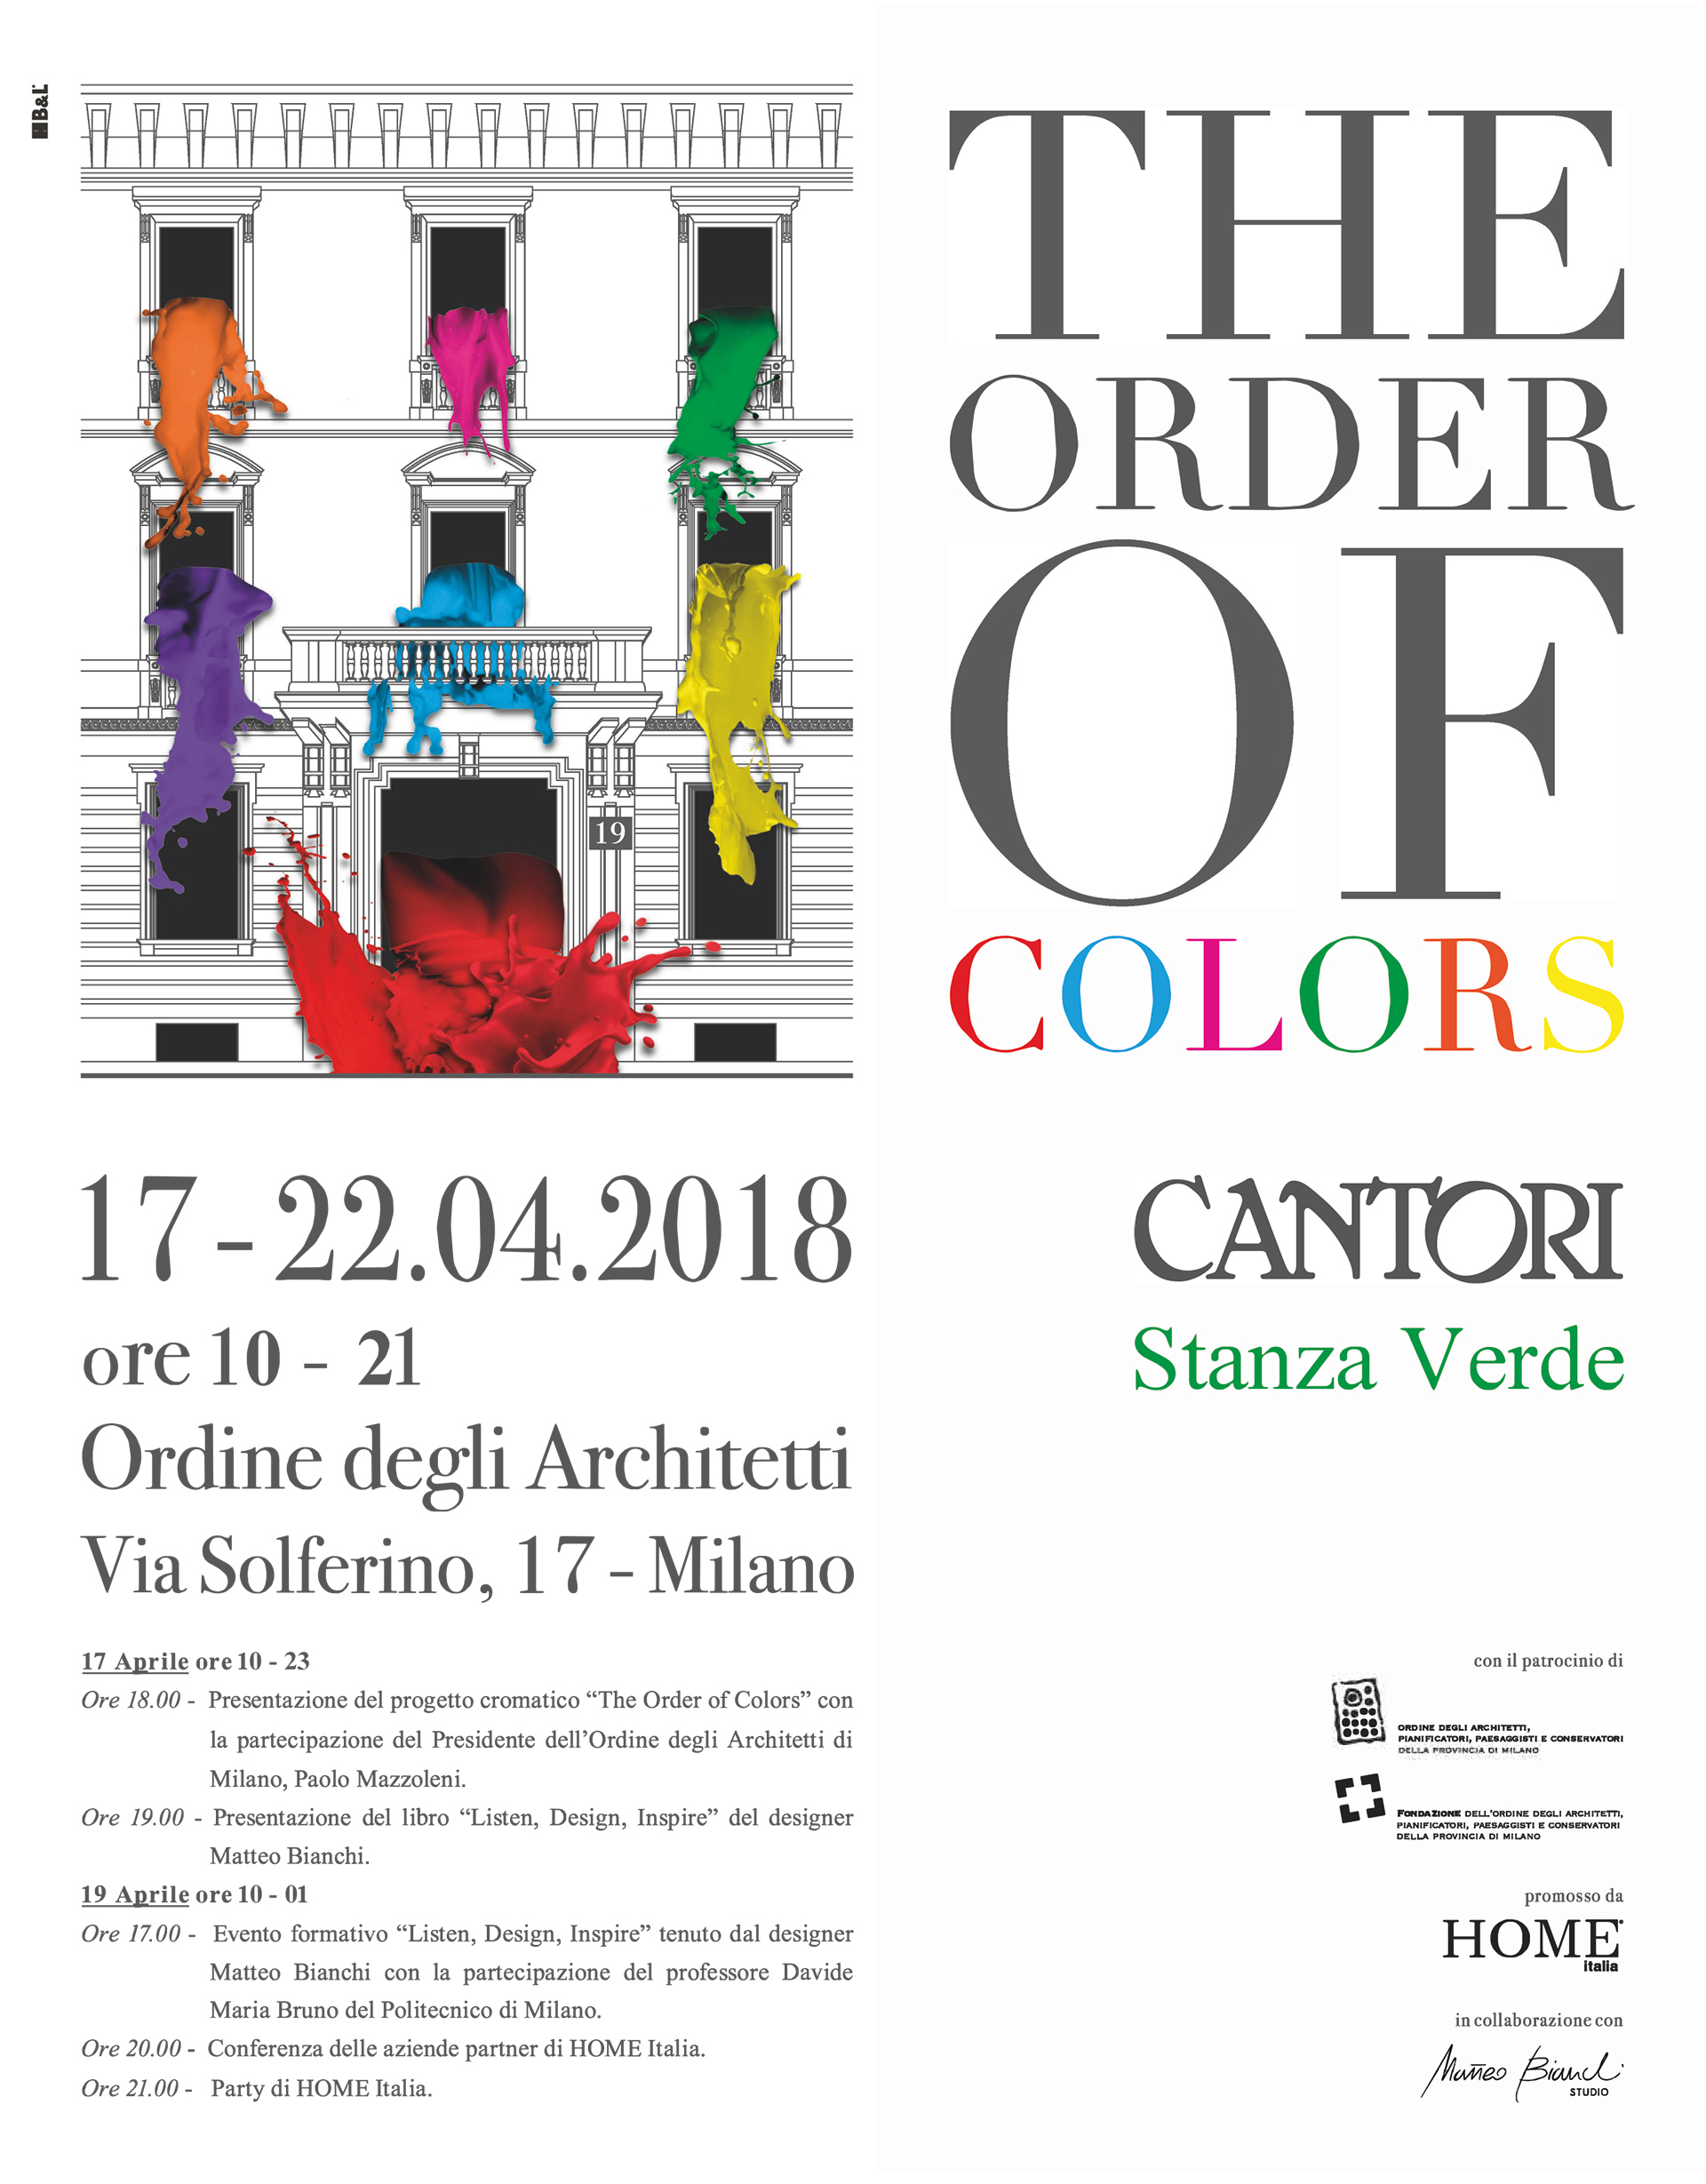 Cantori at Fuori Salone event: The Order of Colors - Cantori